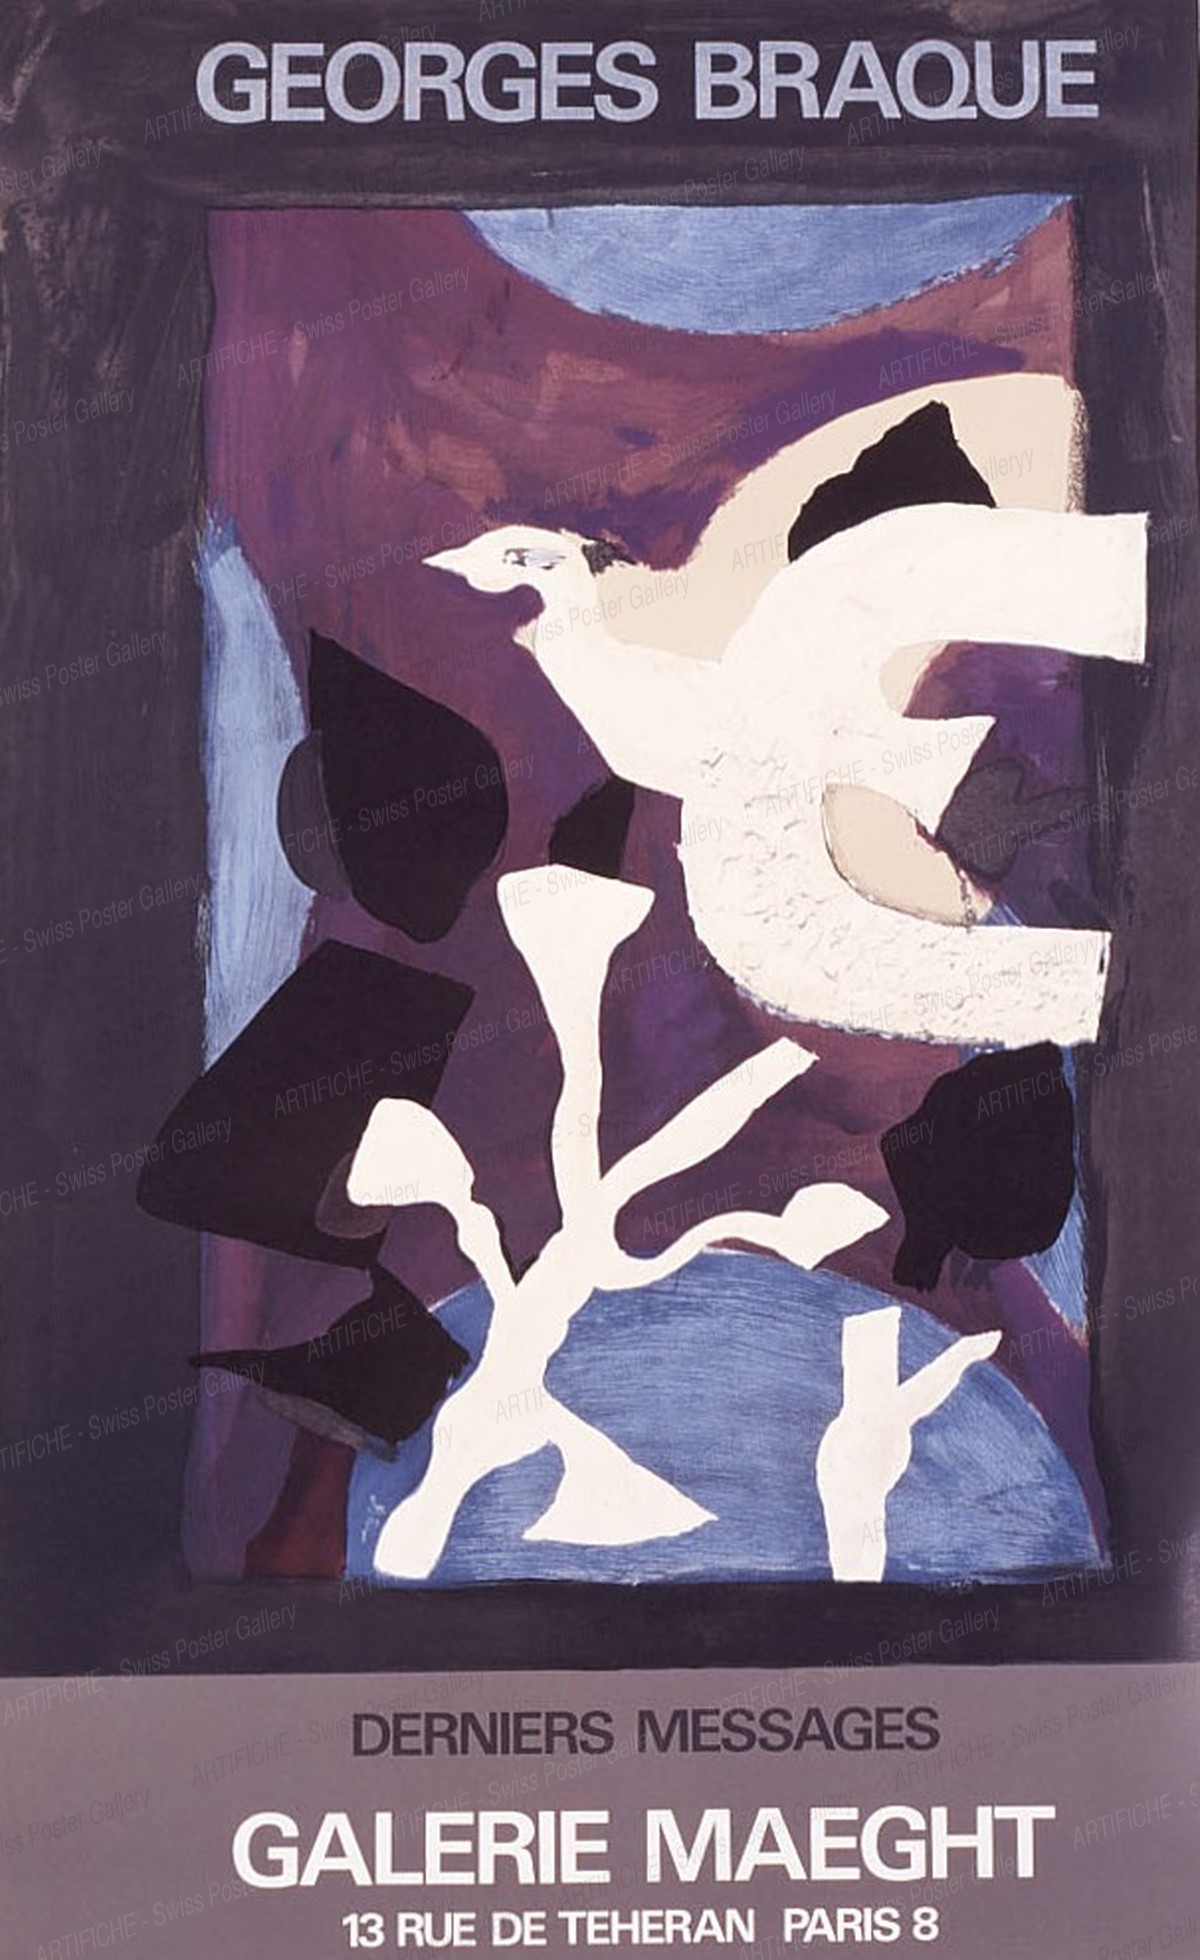 Galerie Maeght – Geroges Braque – Derniers Messages, Georges Braque